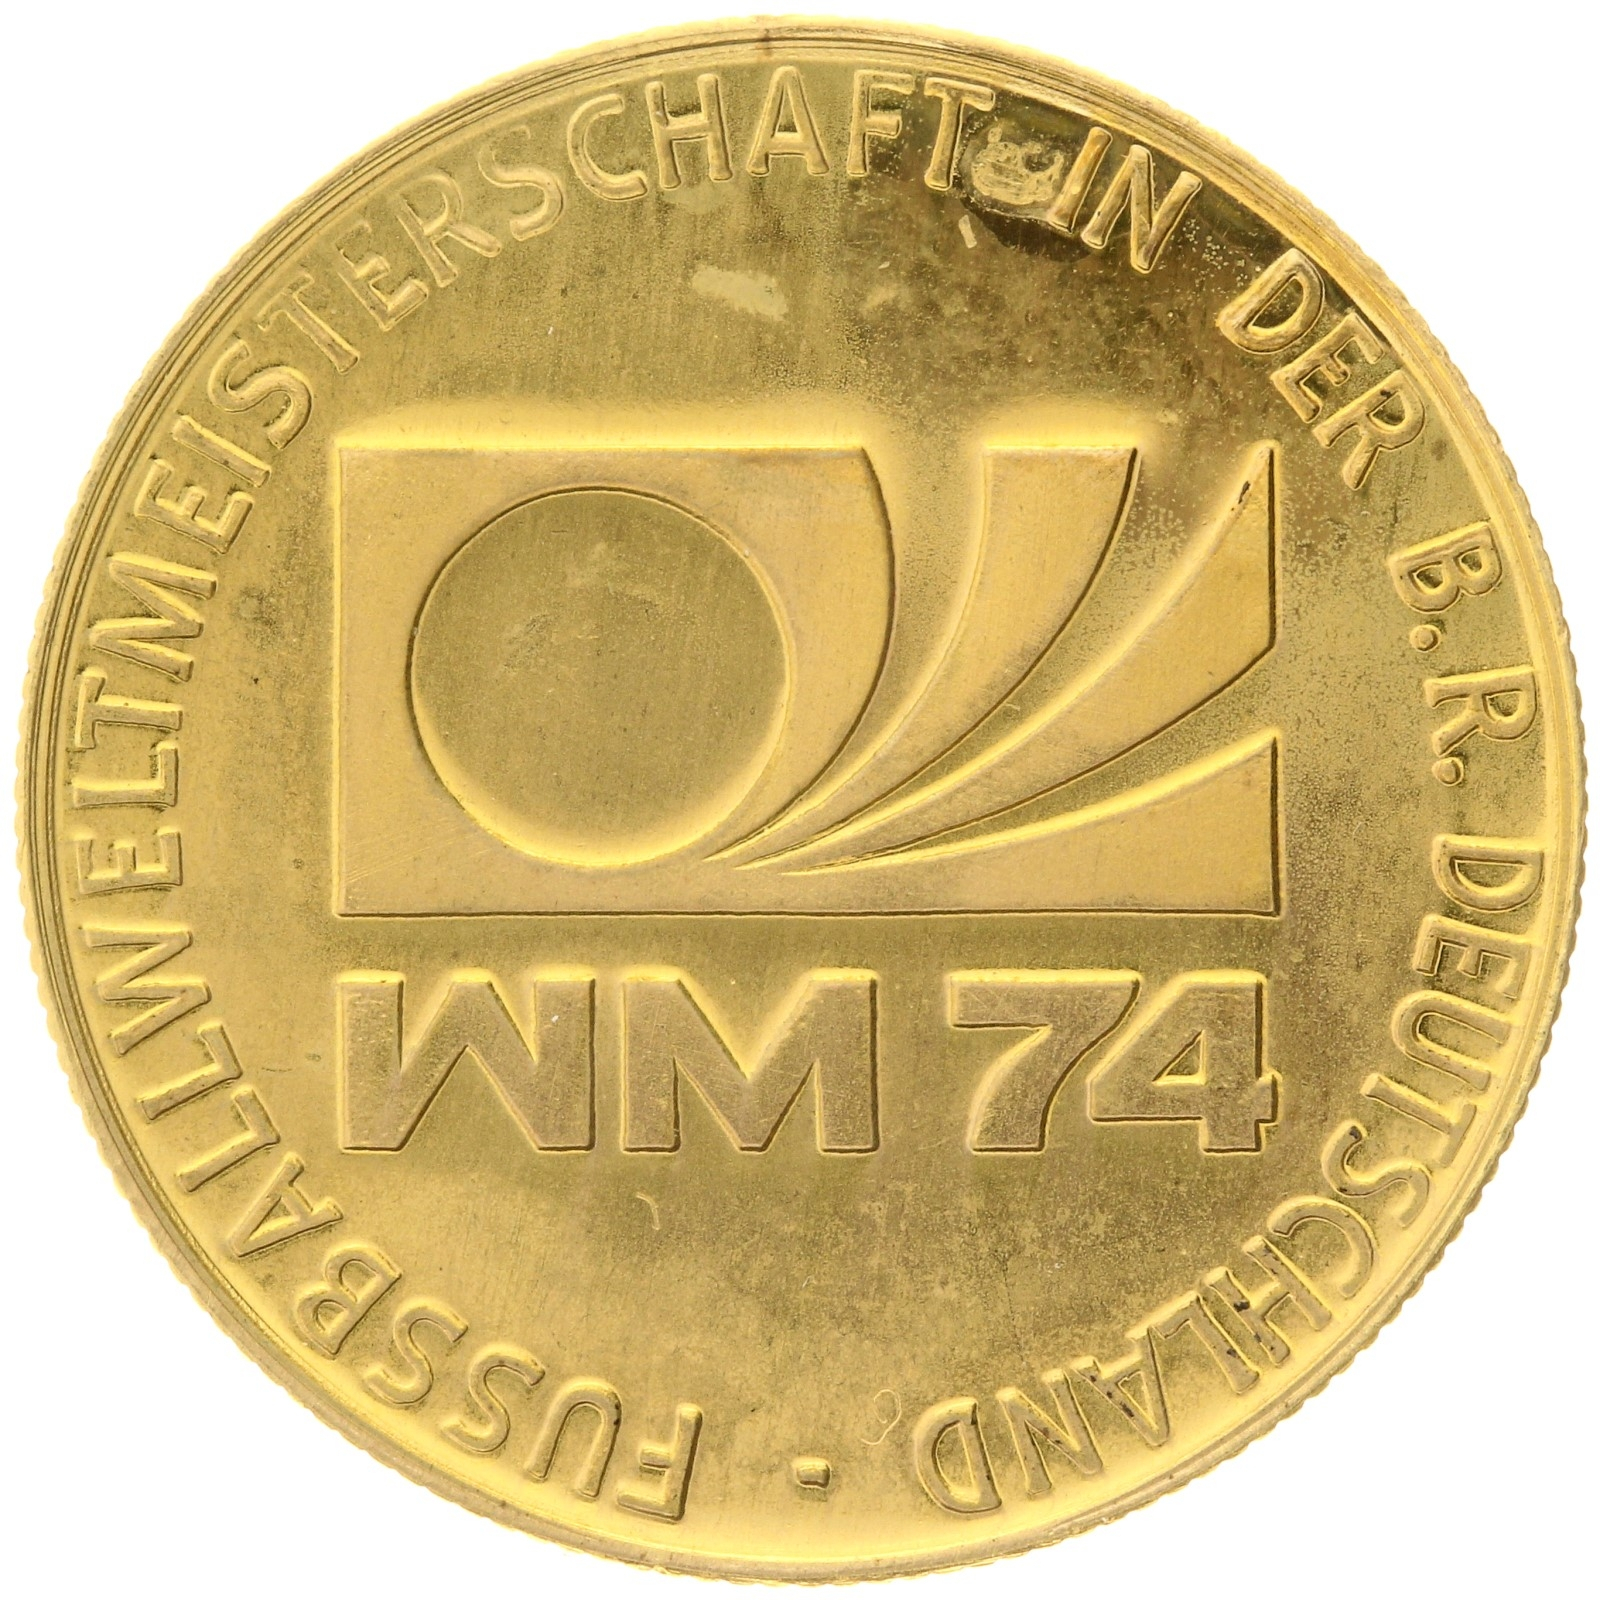 Denmark - Medal (1 ducat) - 1974 - World Cup